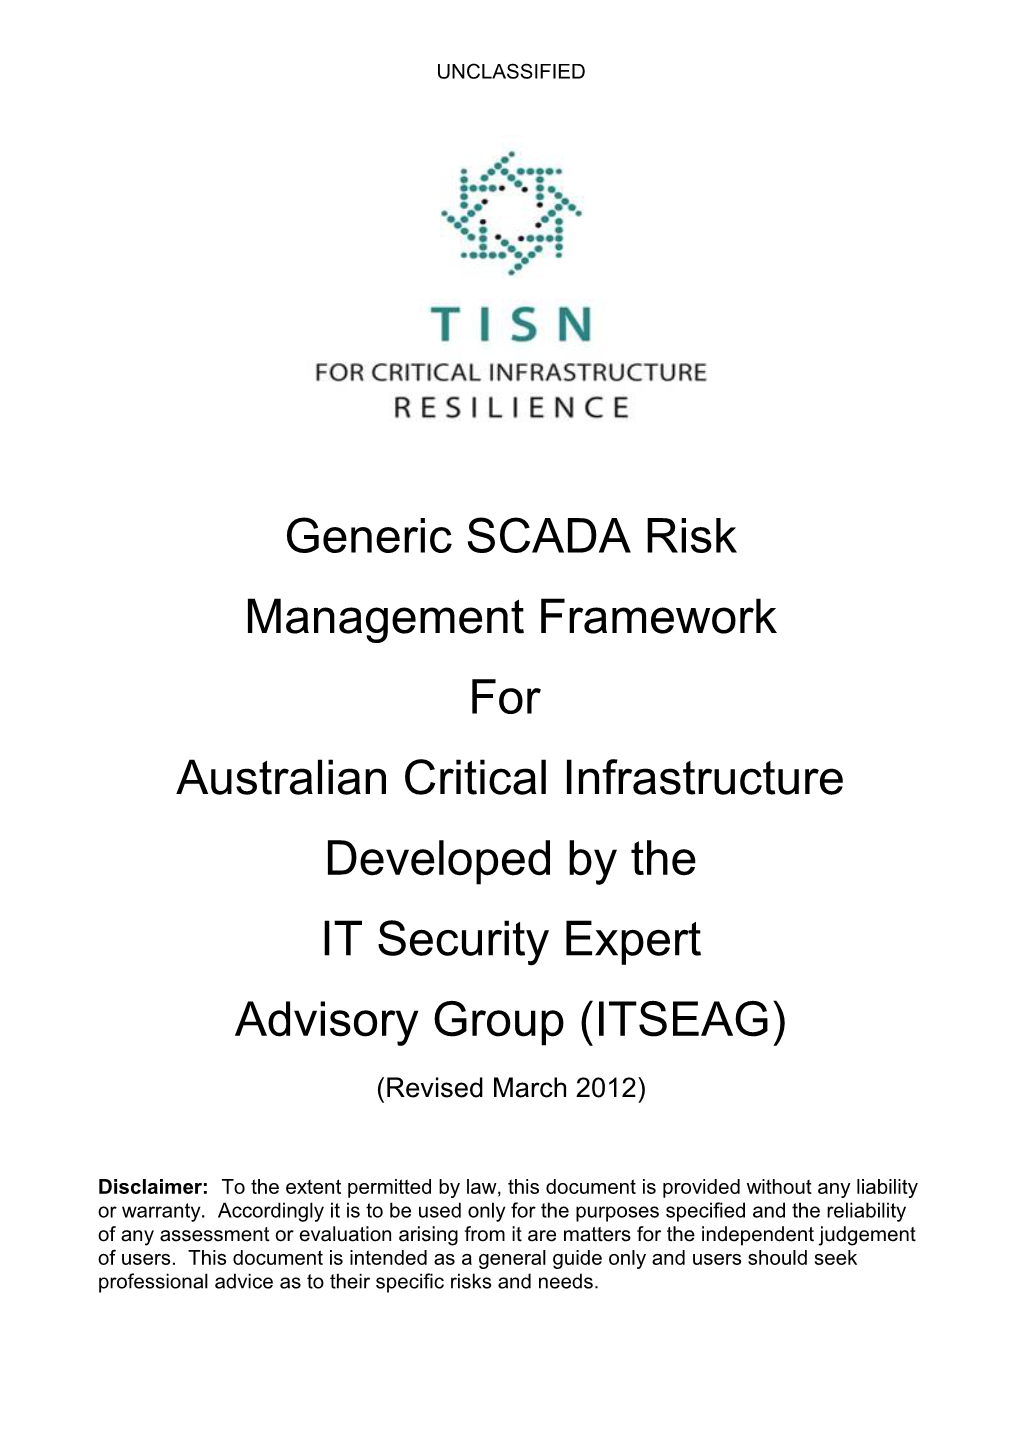 SCADA: Generic Risk Management Framework DOC 1.09MB